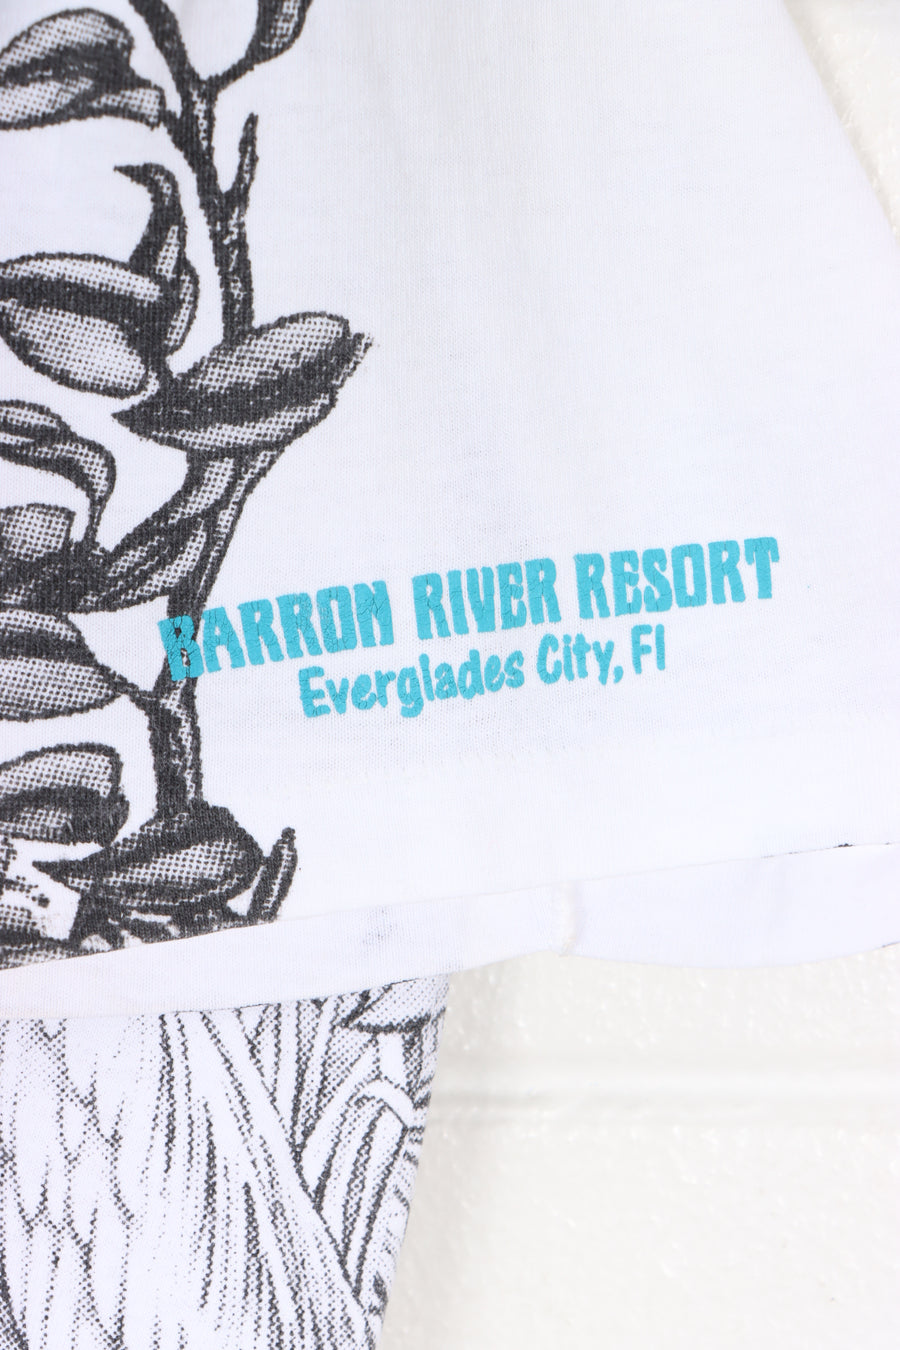 Florida 90s Alligator Swamp All Over Single Stitch T-Shirt USA Made (M-L)